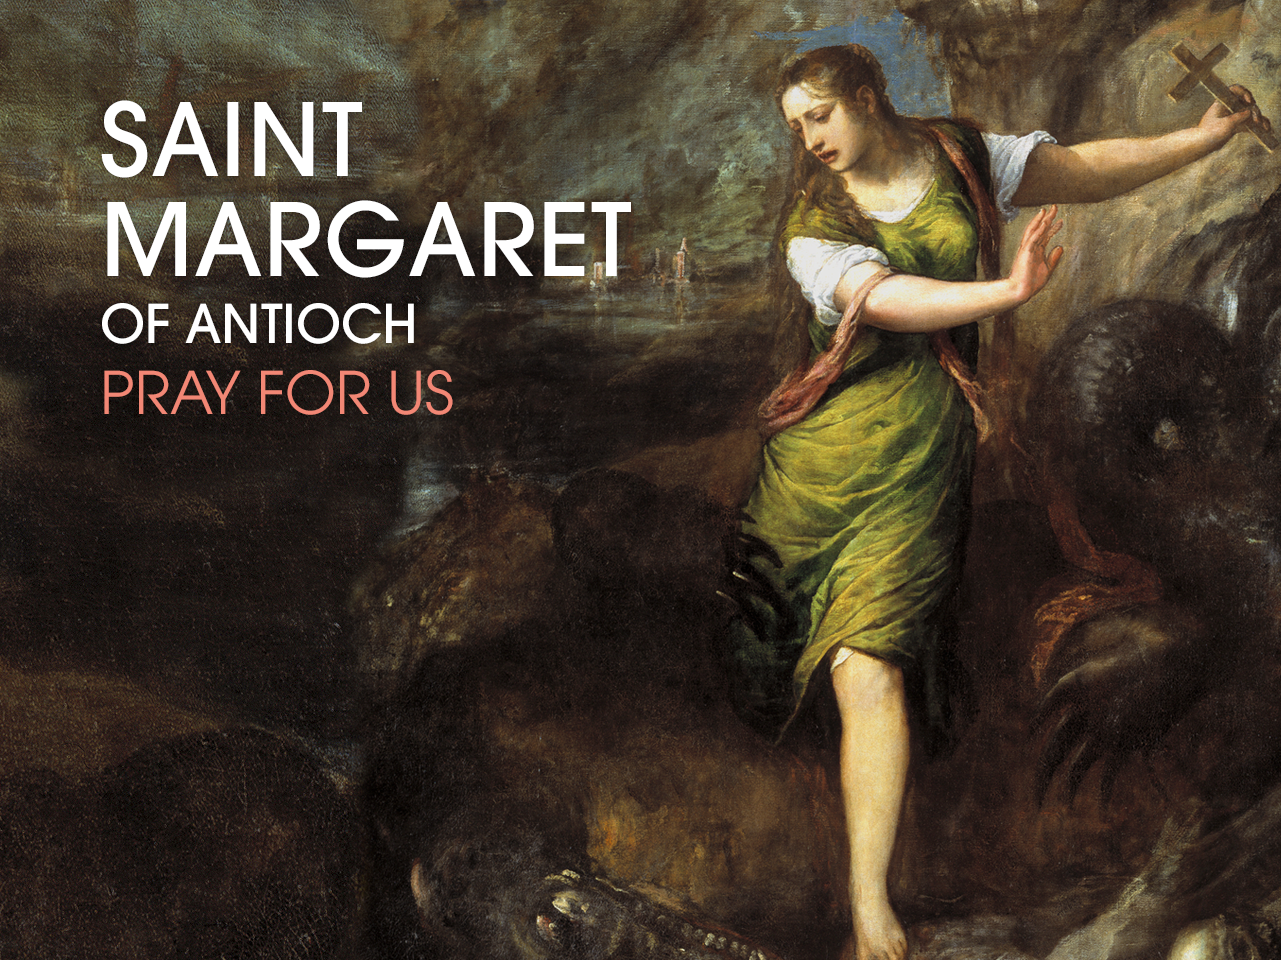 St. Margaret of Antioch